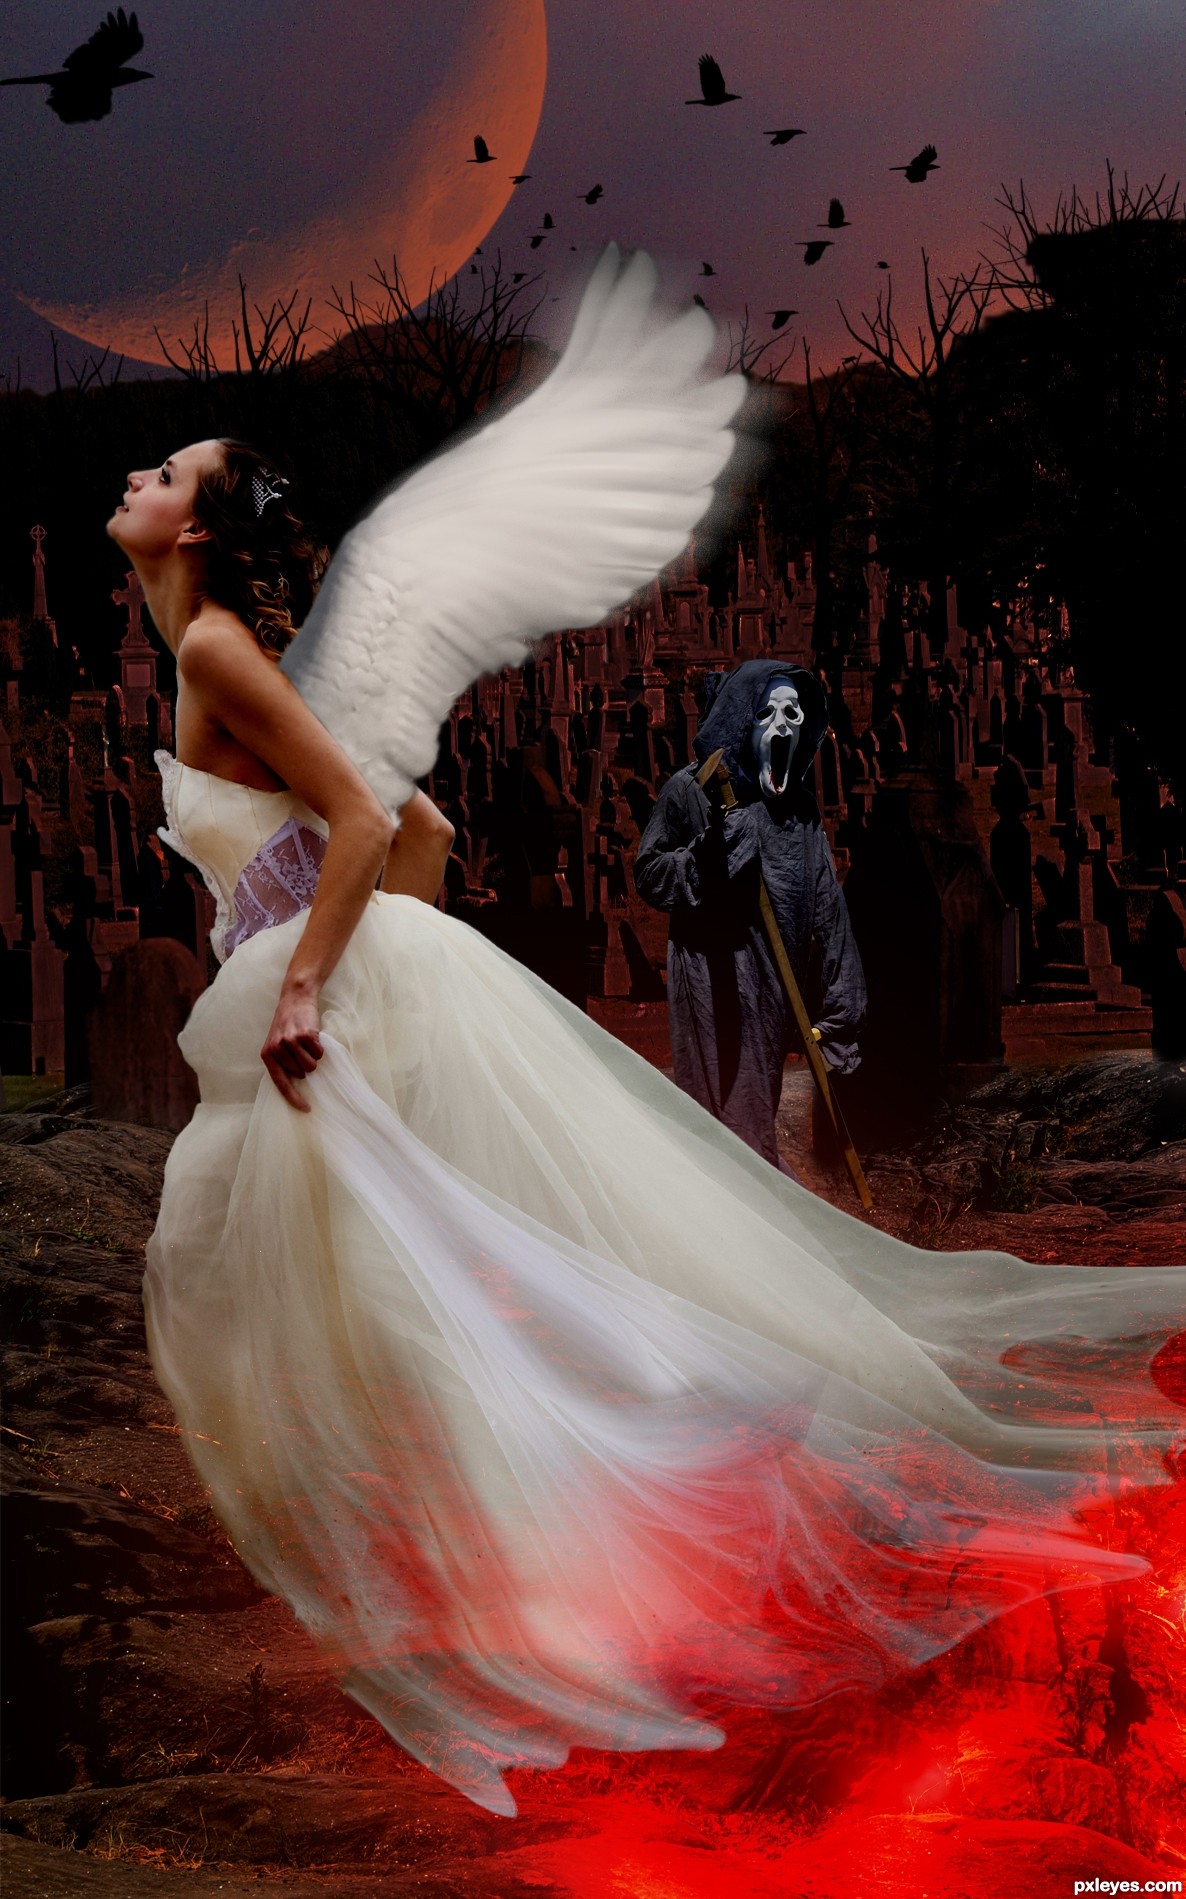 Angels & Demon picture, by filantrop for: good vs evil photoshop